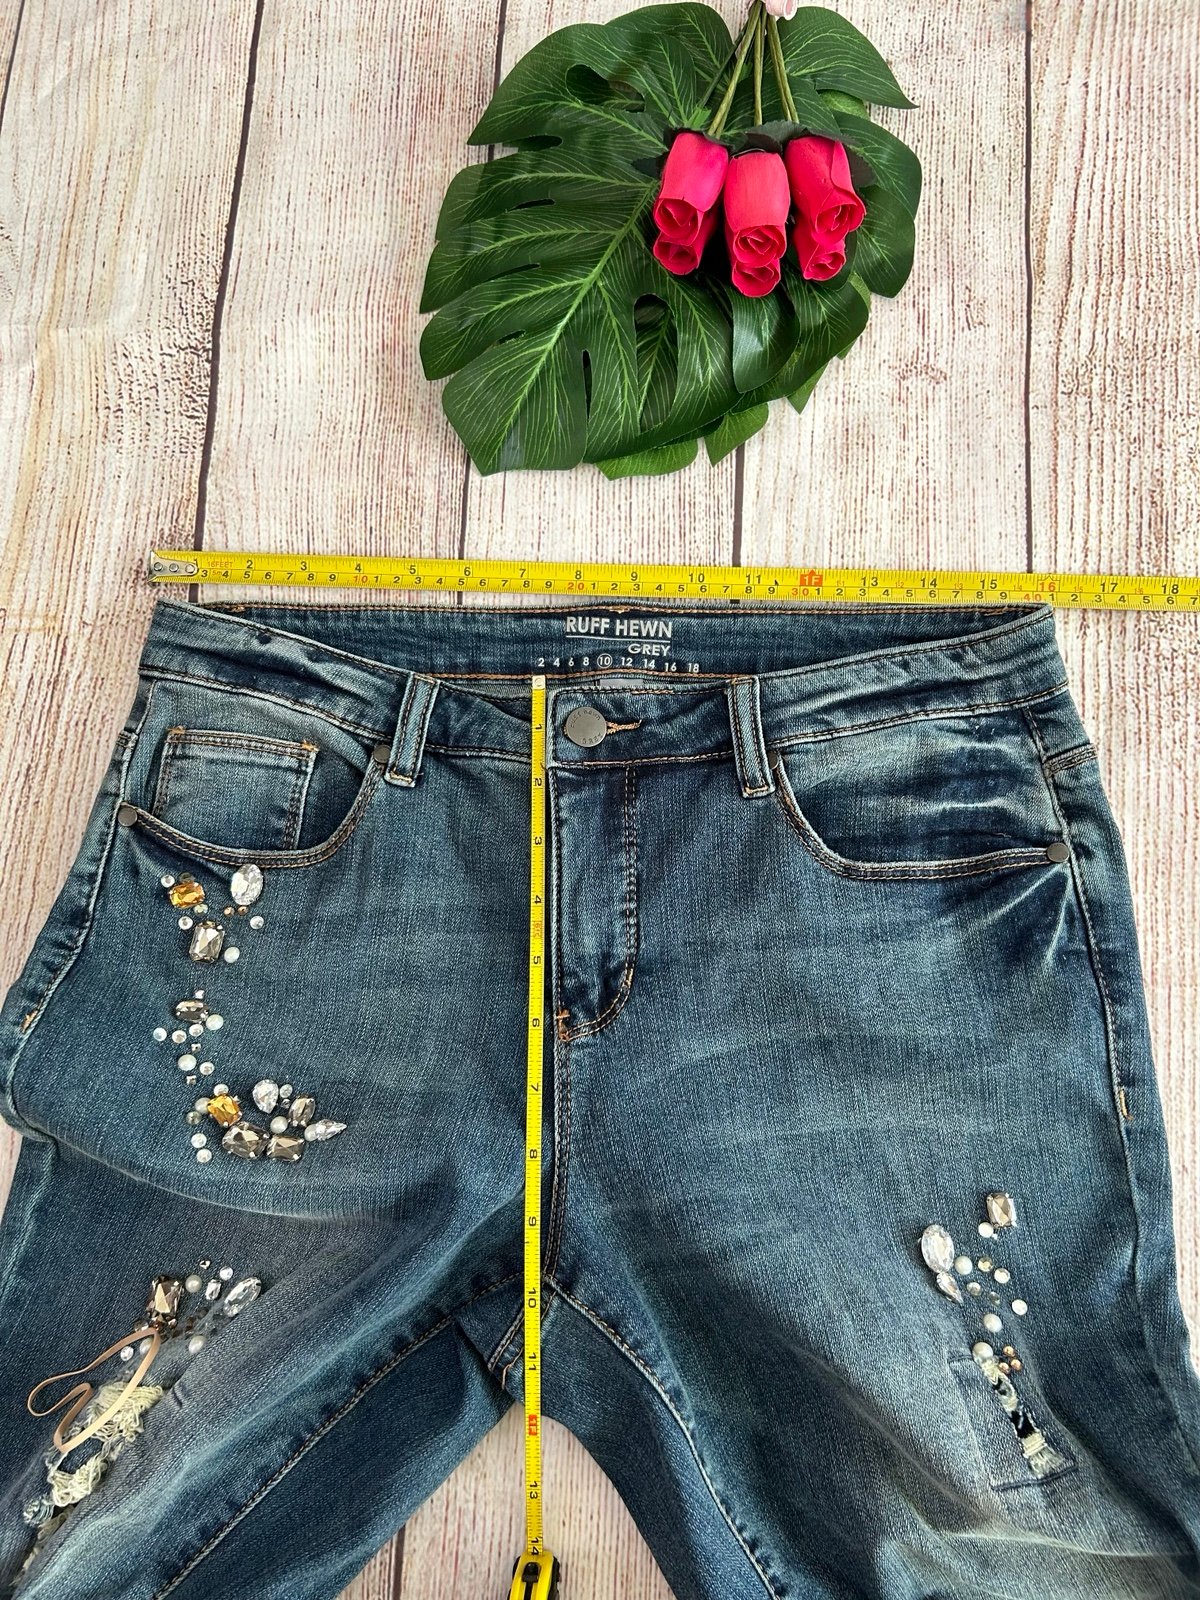 Comfortable Ruff Hewn Women’s Medium Wash Distressed Rhinestone Jeans Size 10 ppwYkvfKc Online Exclusive